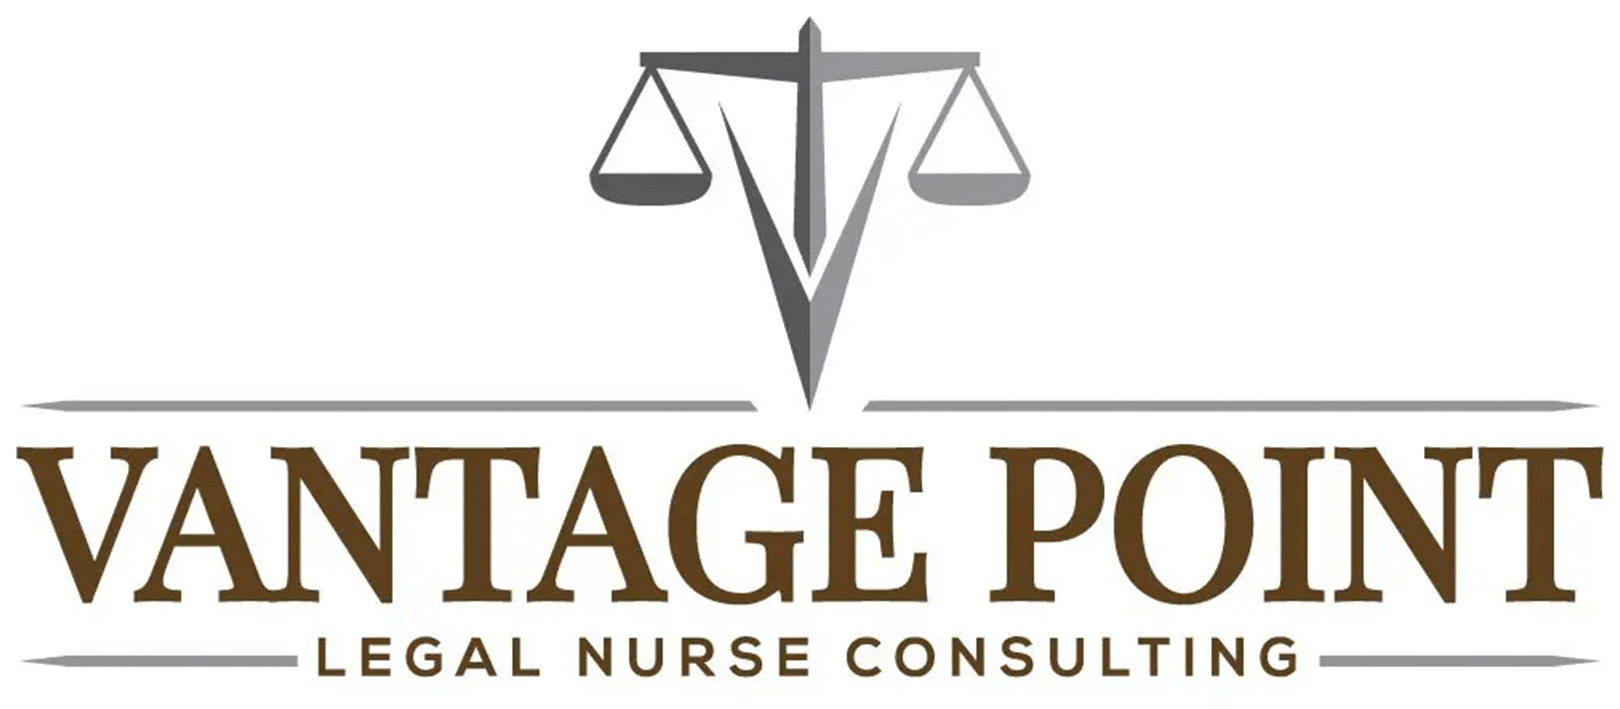 Vantage Point Legal Nurse Consulting